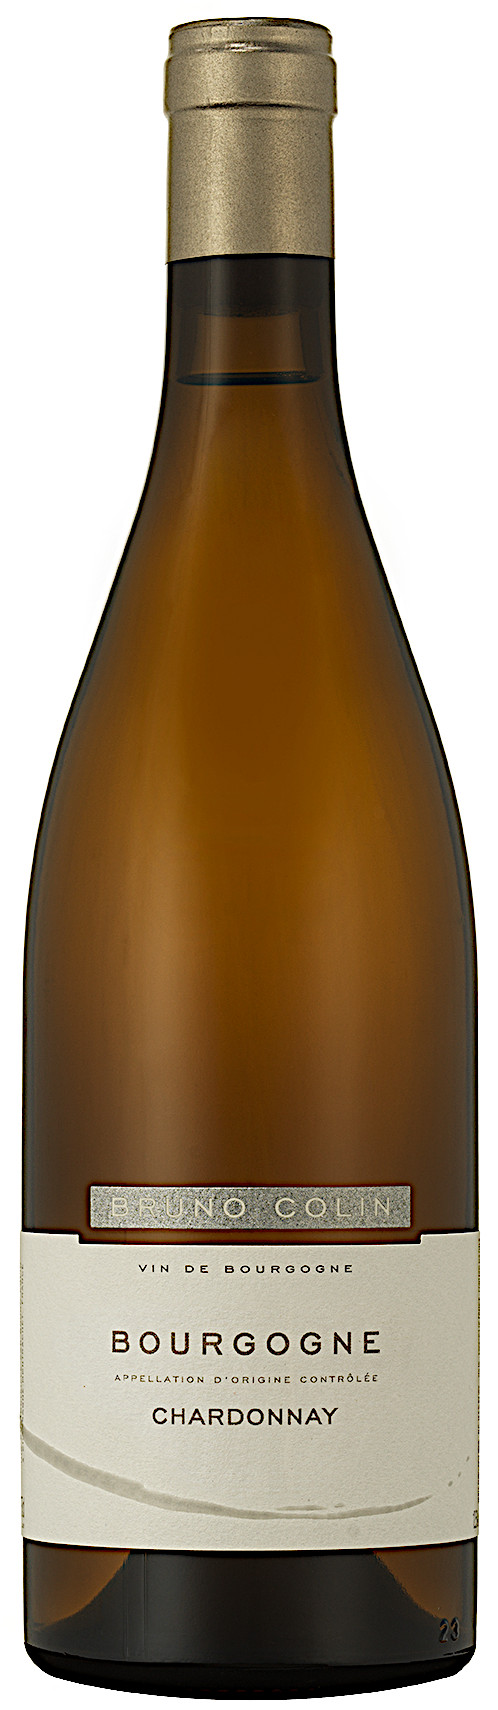 image of Domaine Bruno Colin Bourgogne Chardonnay 2020, 75 cl